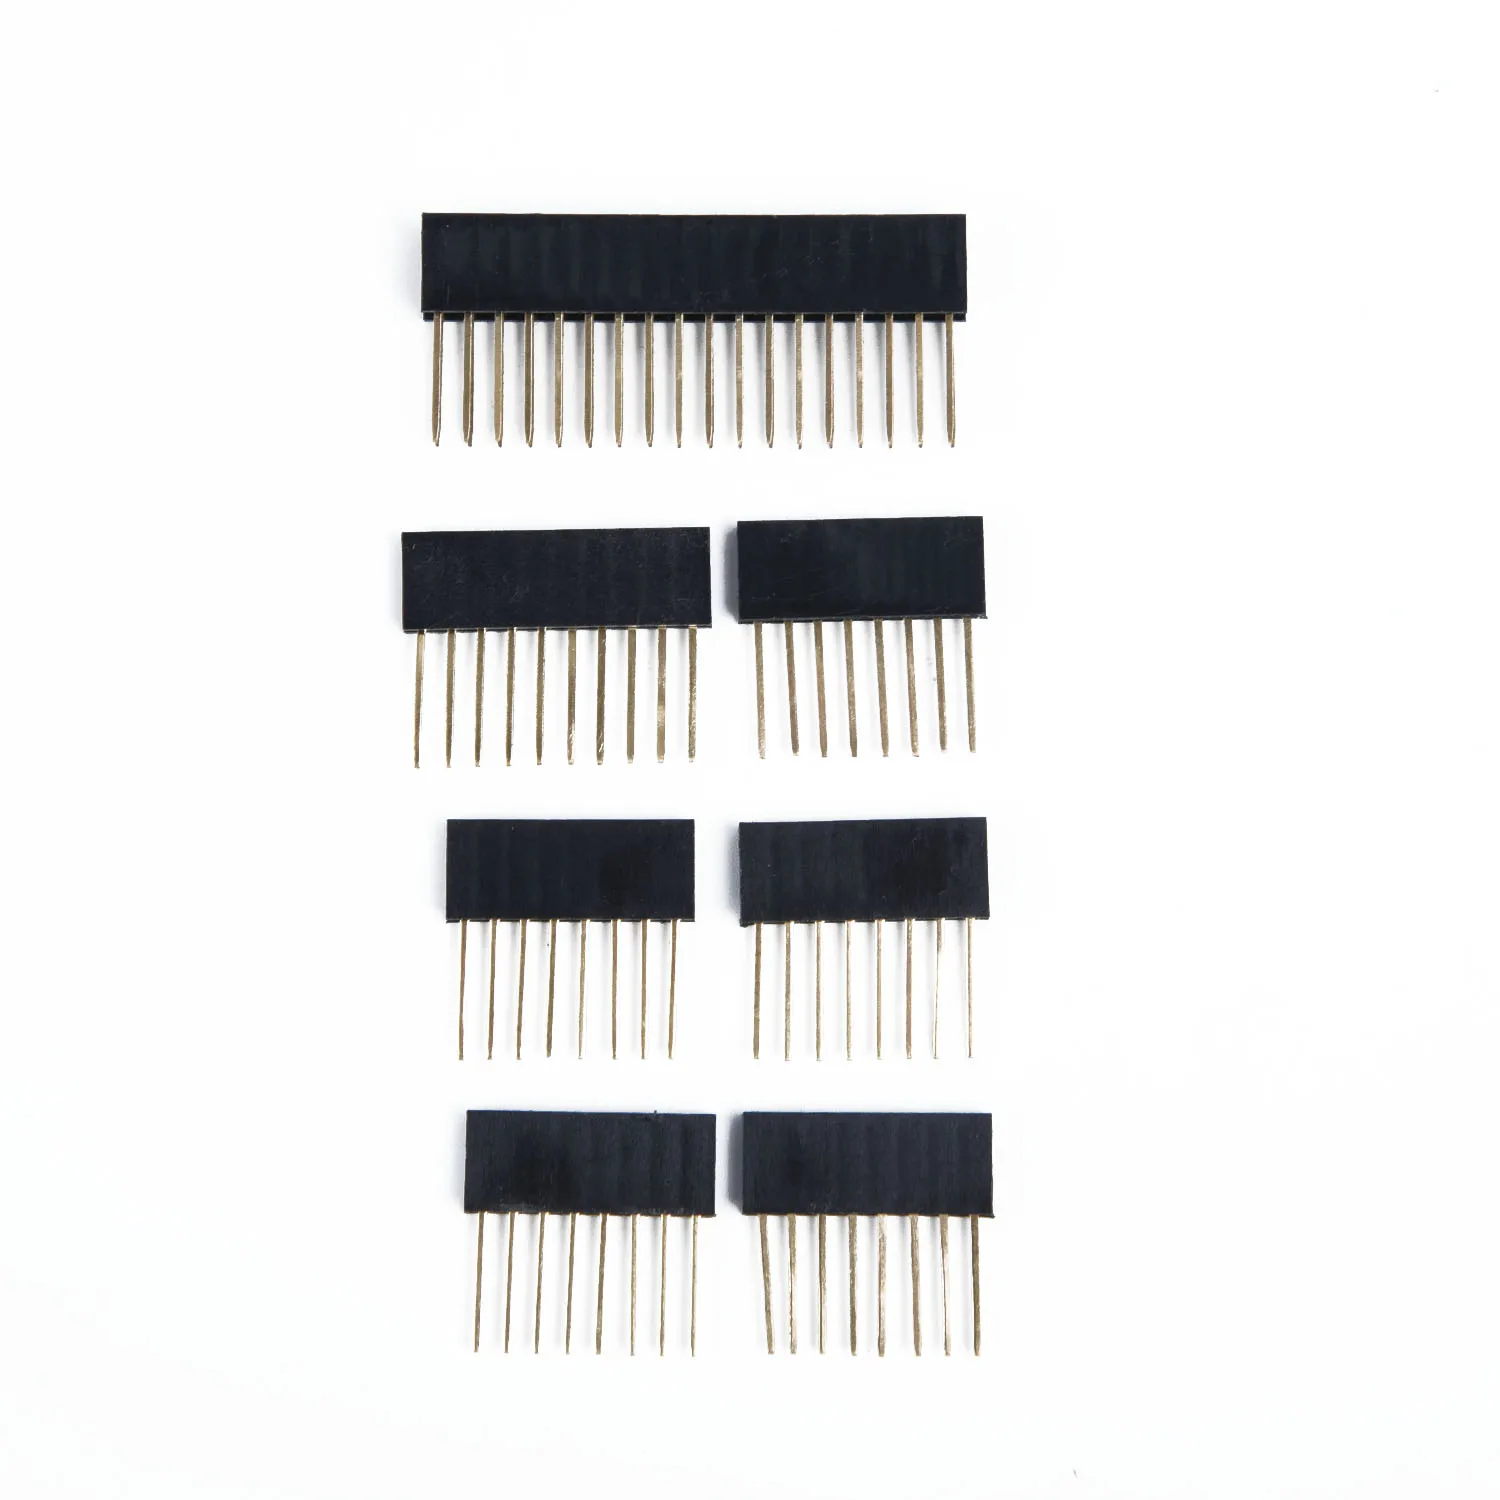 

MEGA-2560 R3 Screw Terminals Blocks Shields Board Kit For Arduino Module